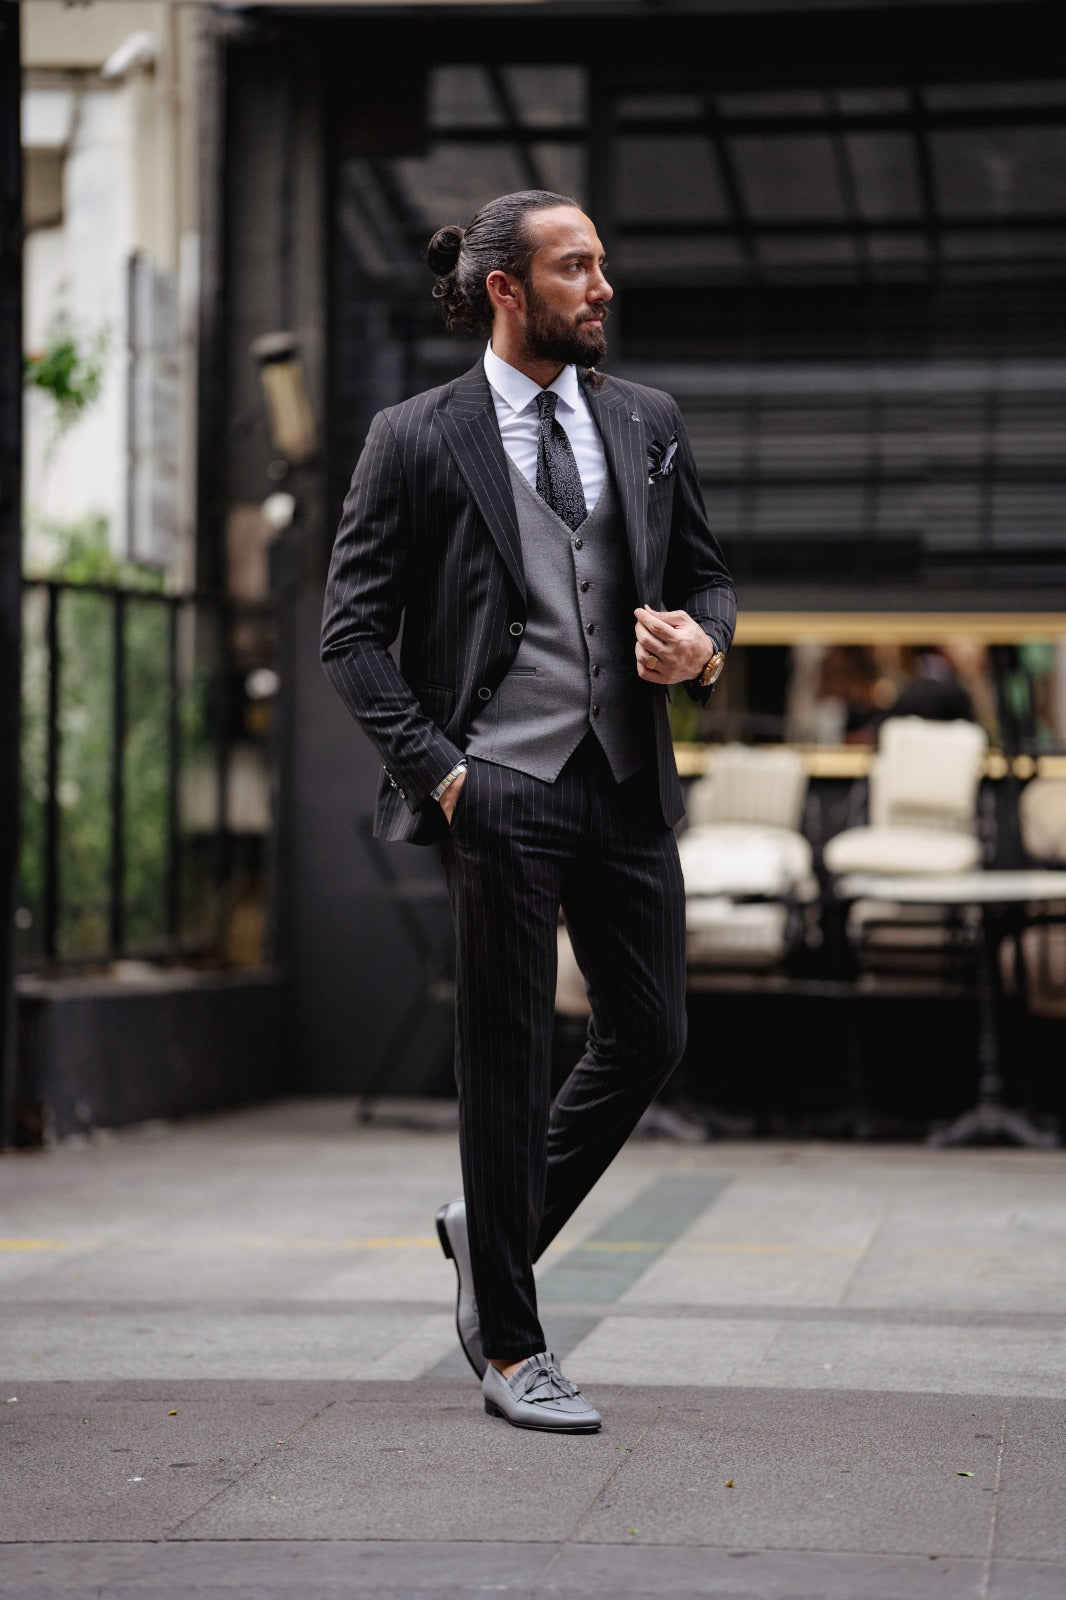 A Black Slim Fit Plaid Detailed Suit on display.